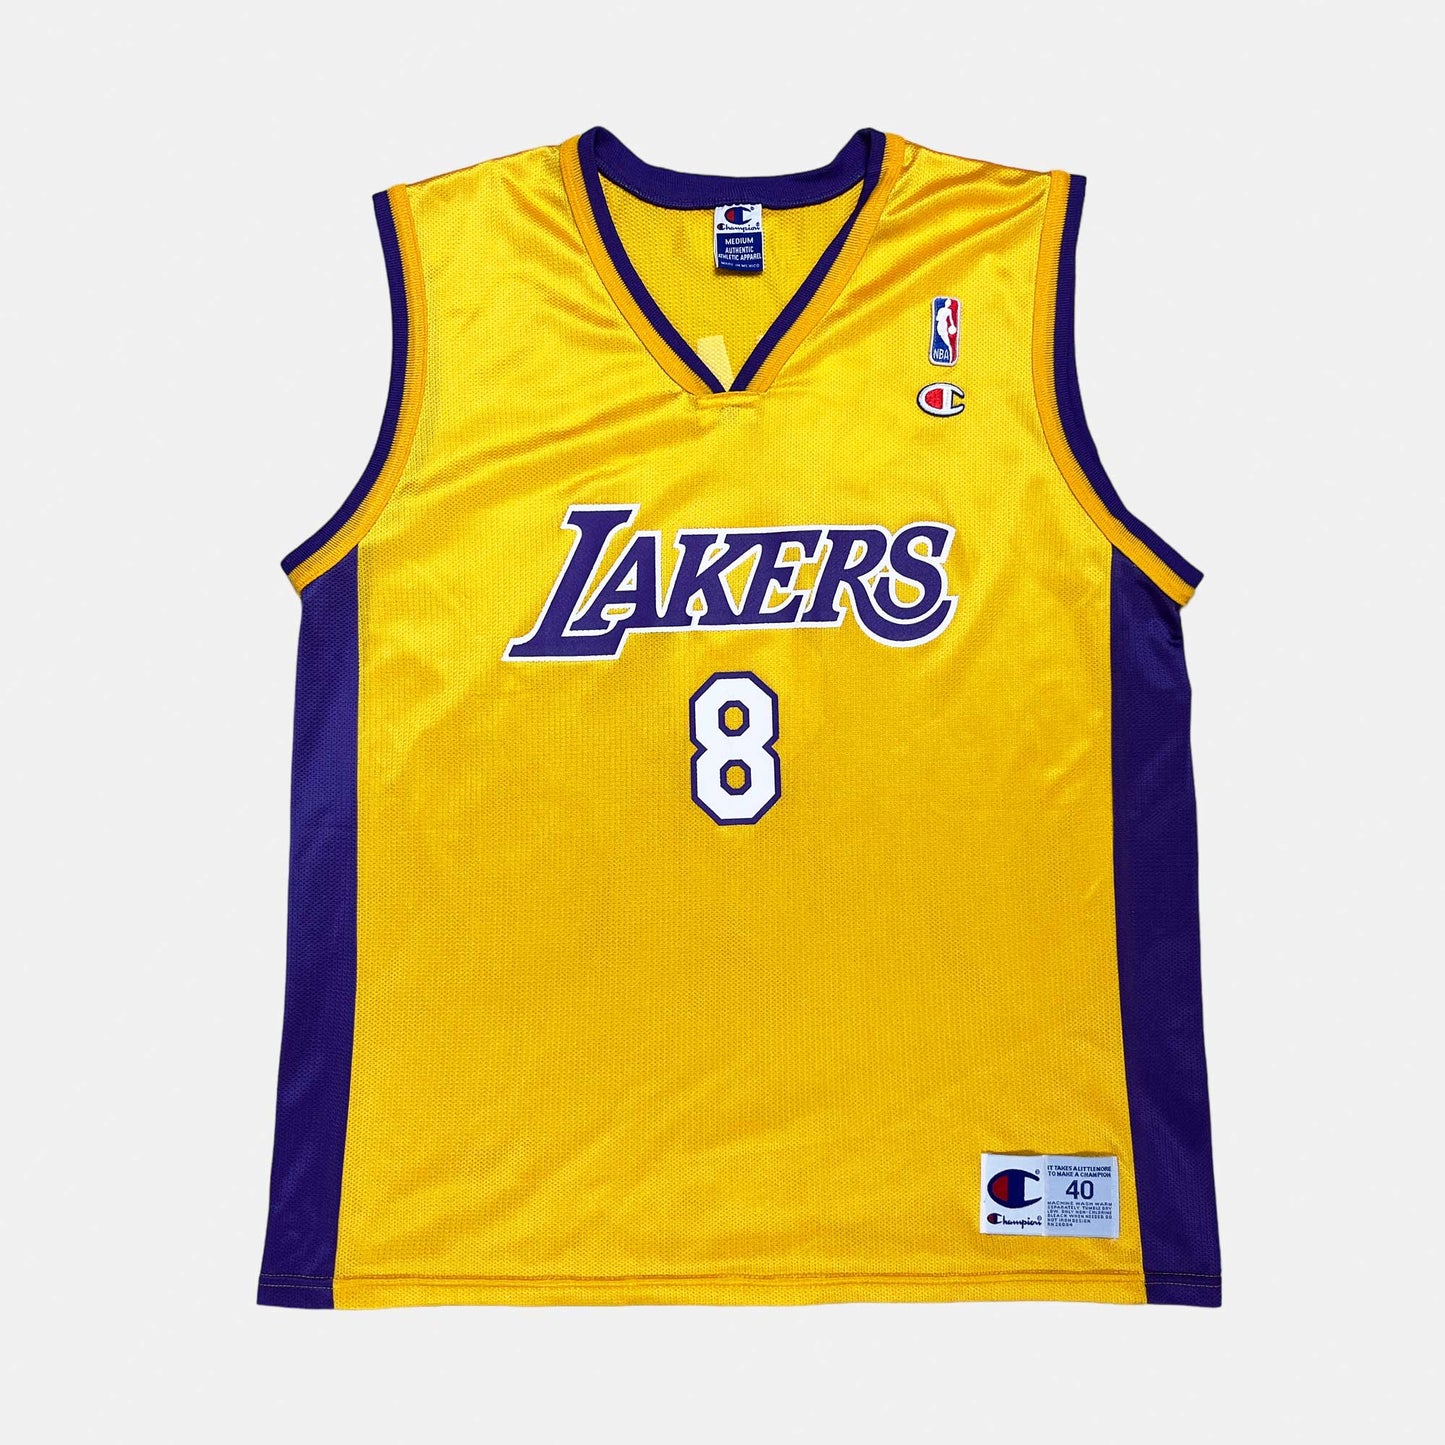 Los Angeles Lakers - Kobe Bryant - Größe M / US 40 - Champion - NBA Trikot